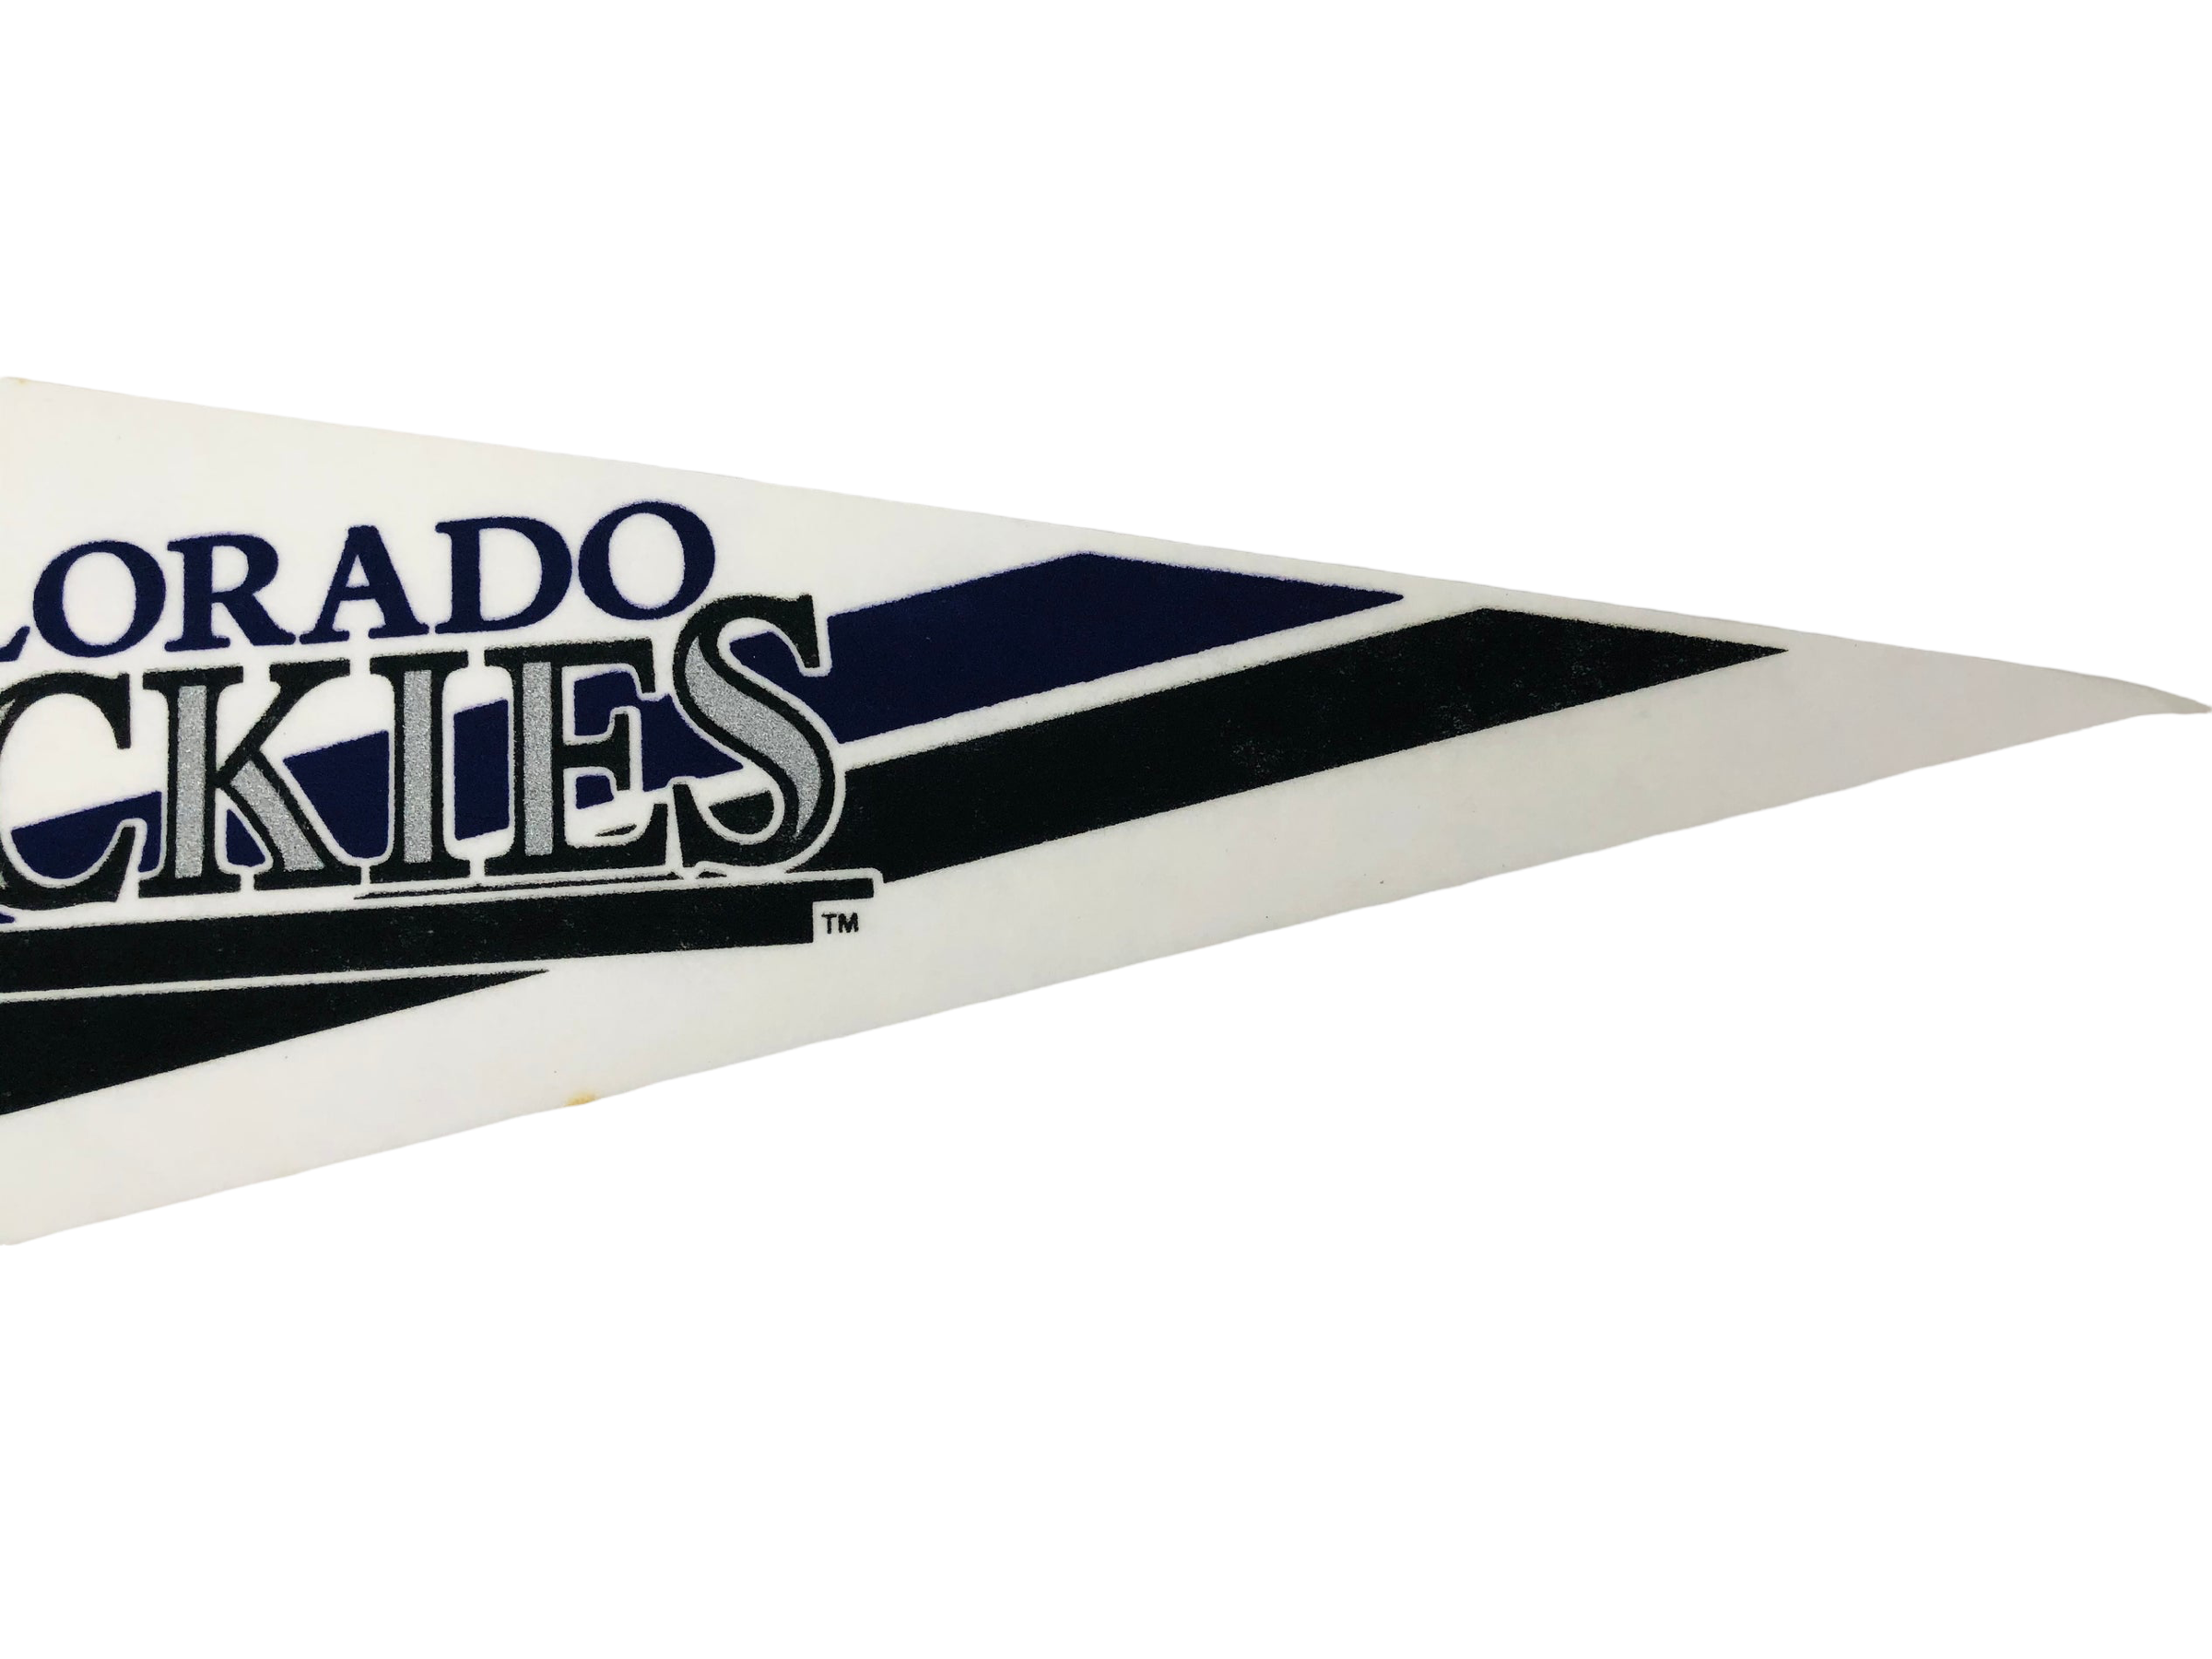 COLORADO ROCKIES VINTAGE 1990'S RUSSELL ATHLETIC DIAMOND COLLECTION JE -  Bucks County Baseball Co.